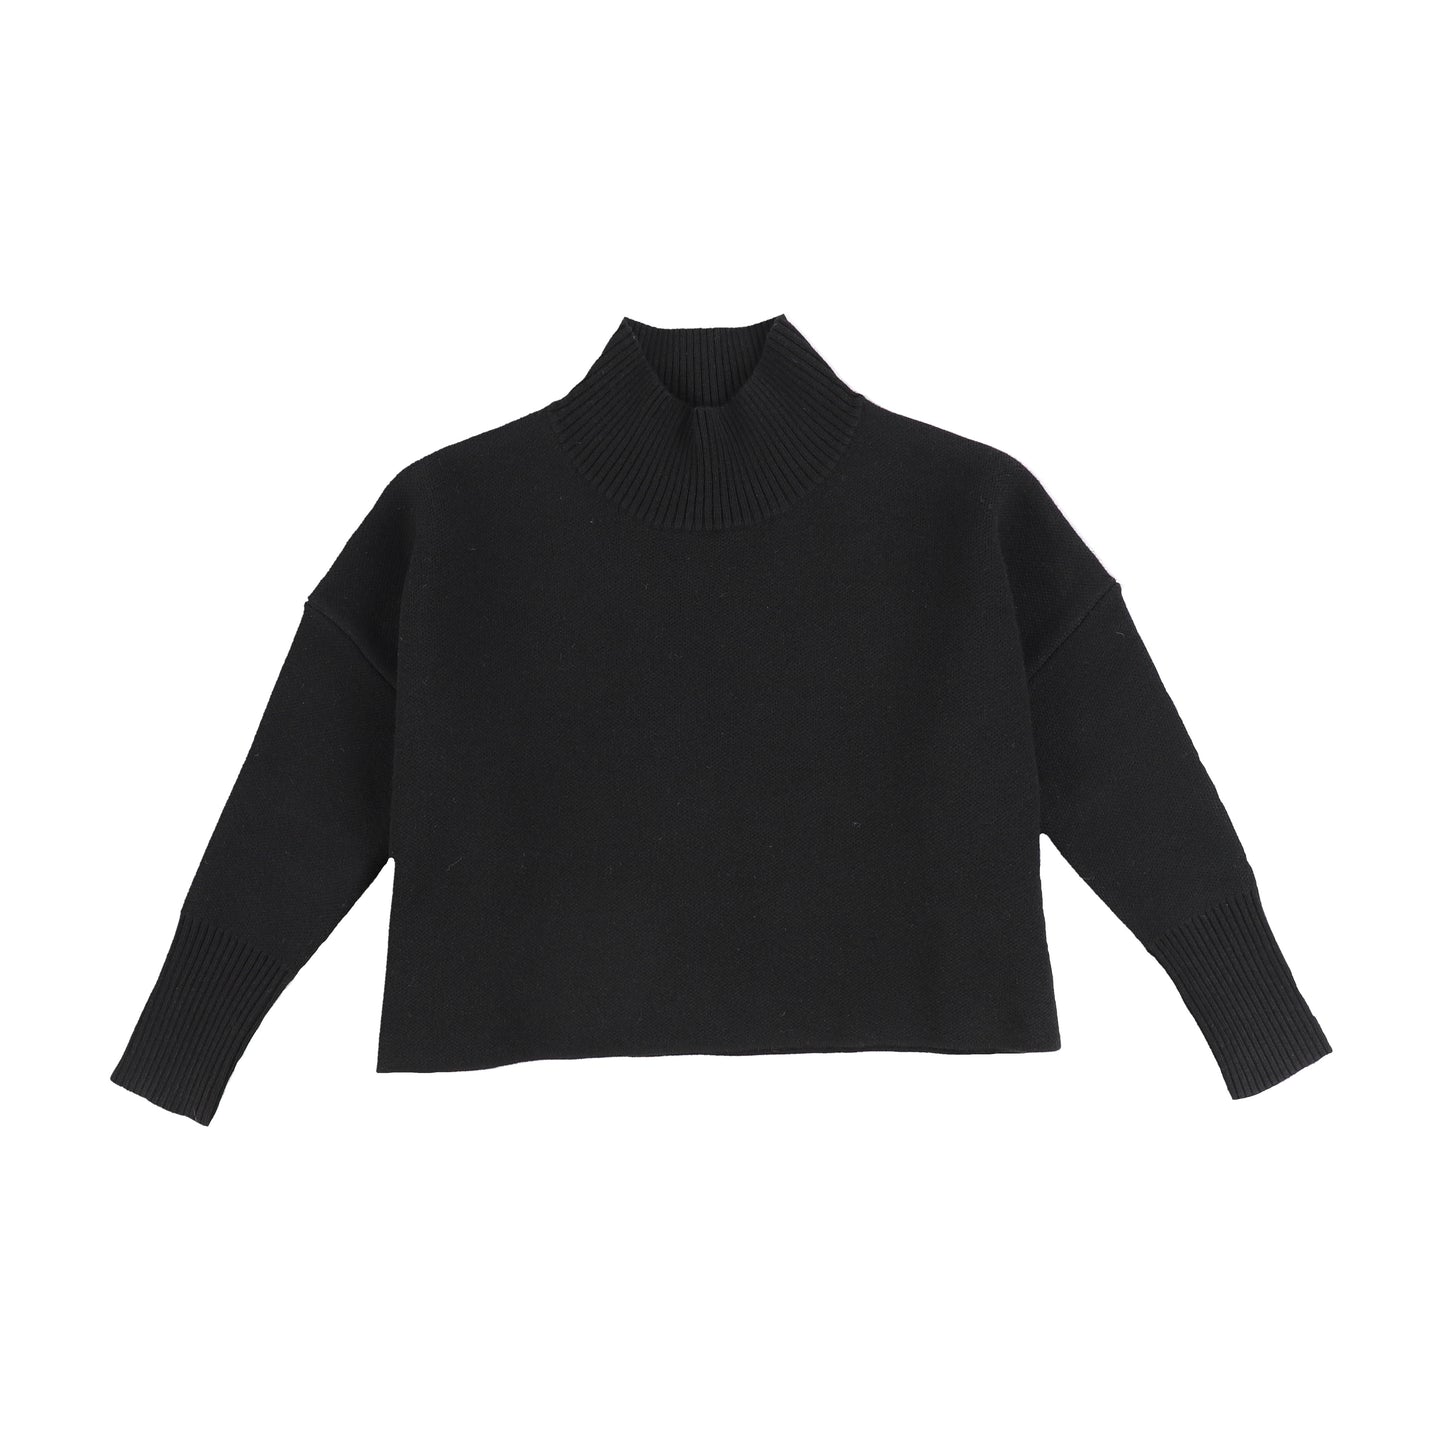 Bamboo Original Black Knit Cropped Turtleneck Sweater [Final Sale]